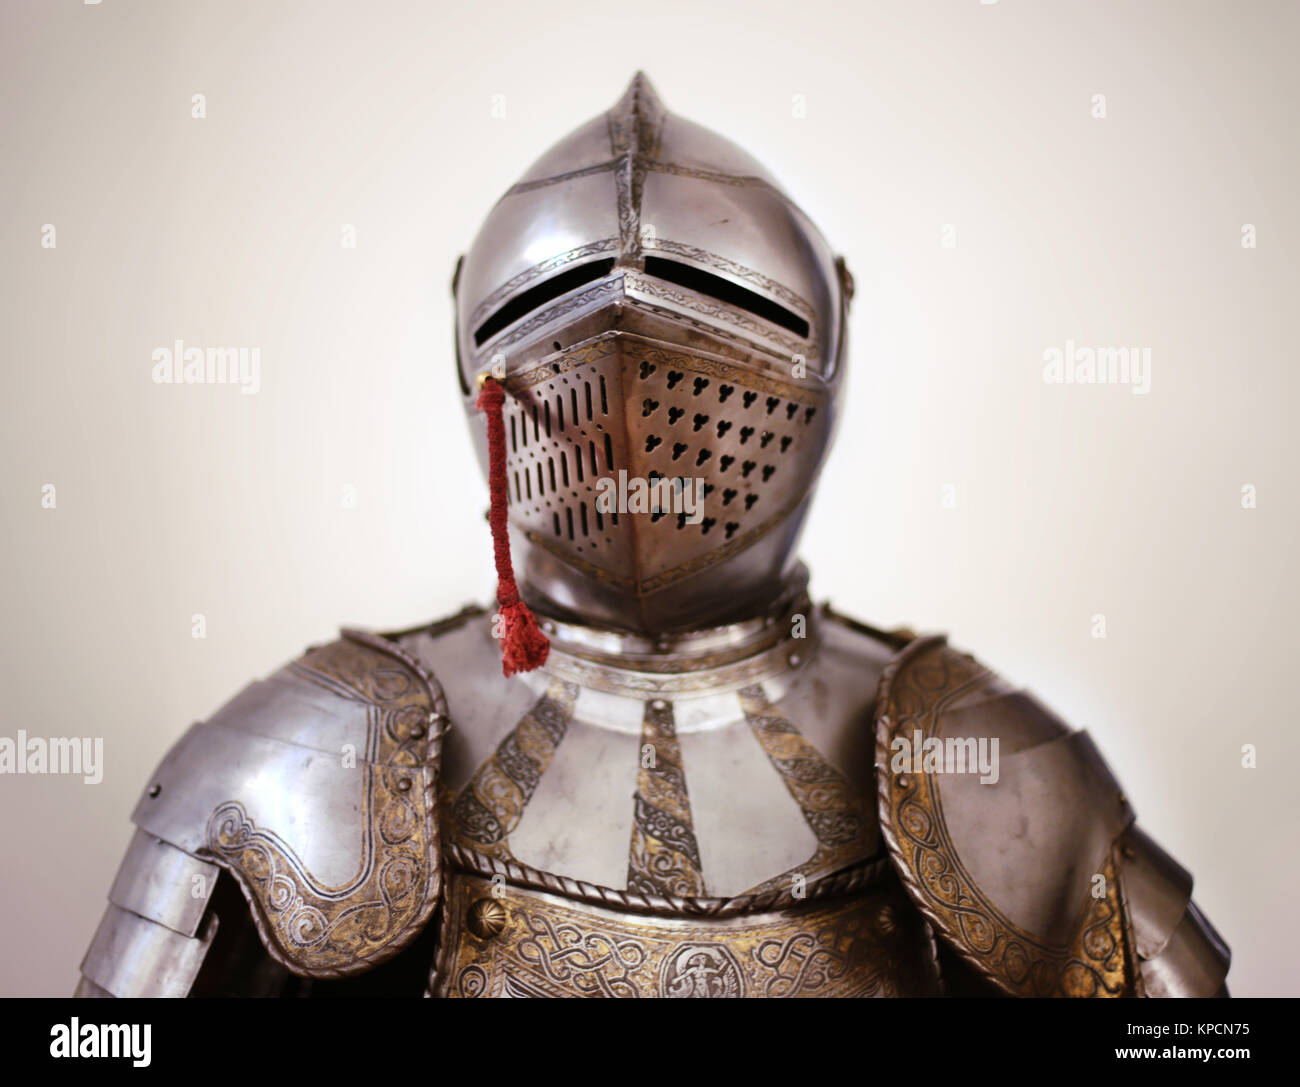 https://c8.alamy.com/comp/KPCN75/ancient-metal-armor-KPCN75.jpg